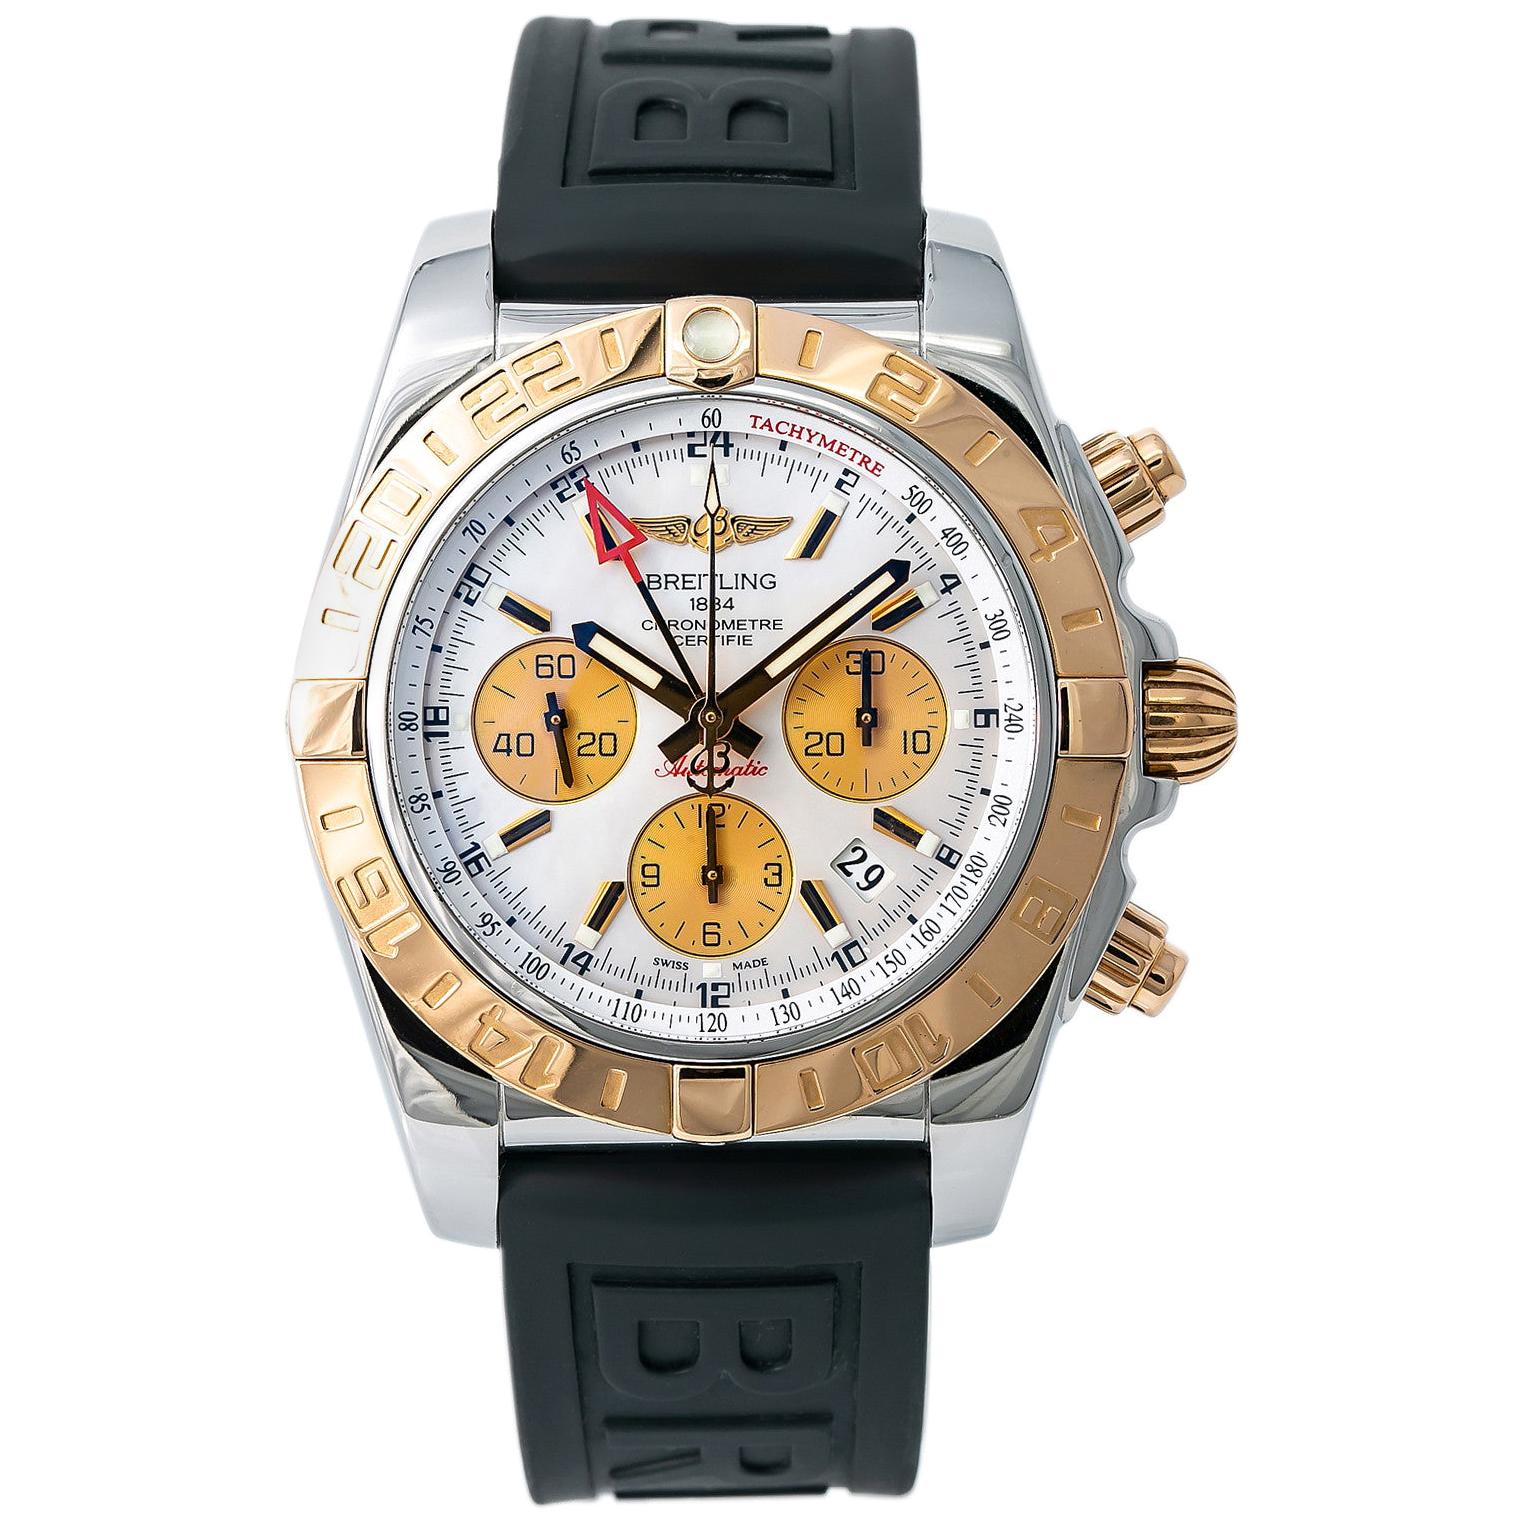 Breitling Chronomat CB0420 Men’s Auto Chronograph MOP Dial Watch 18k Two-Tone For Sale